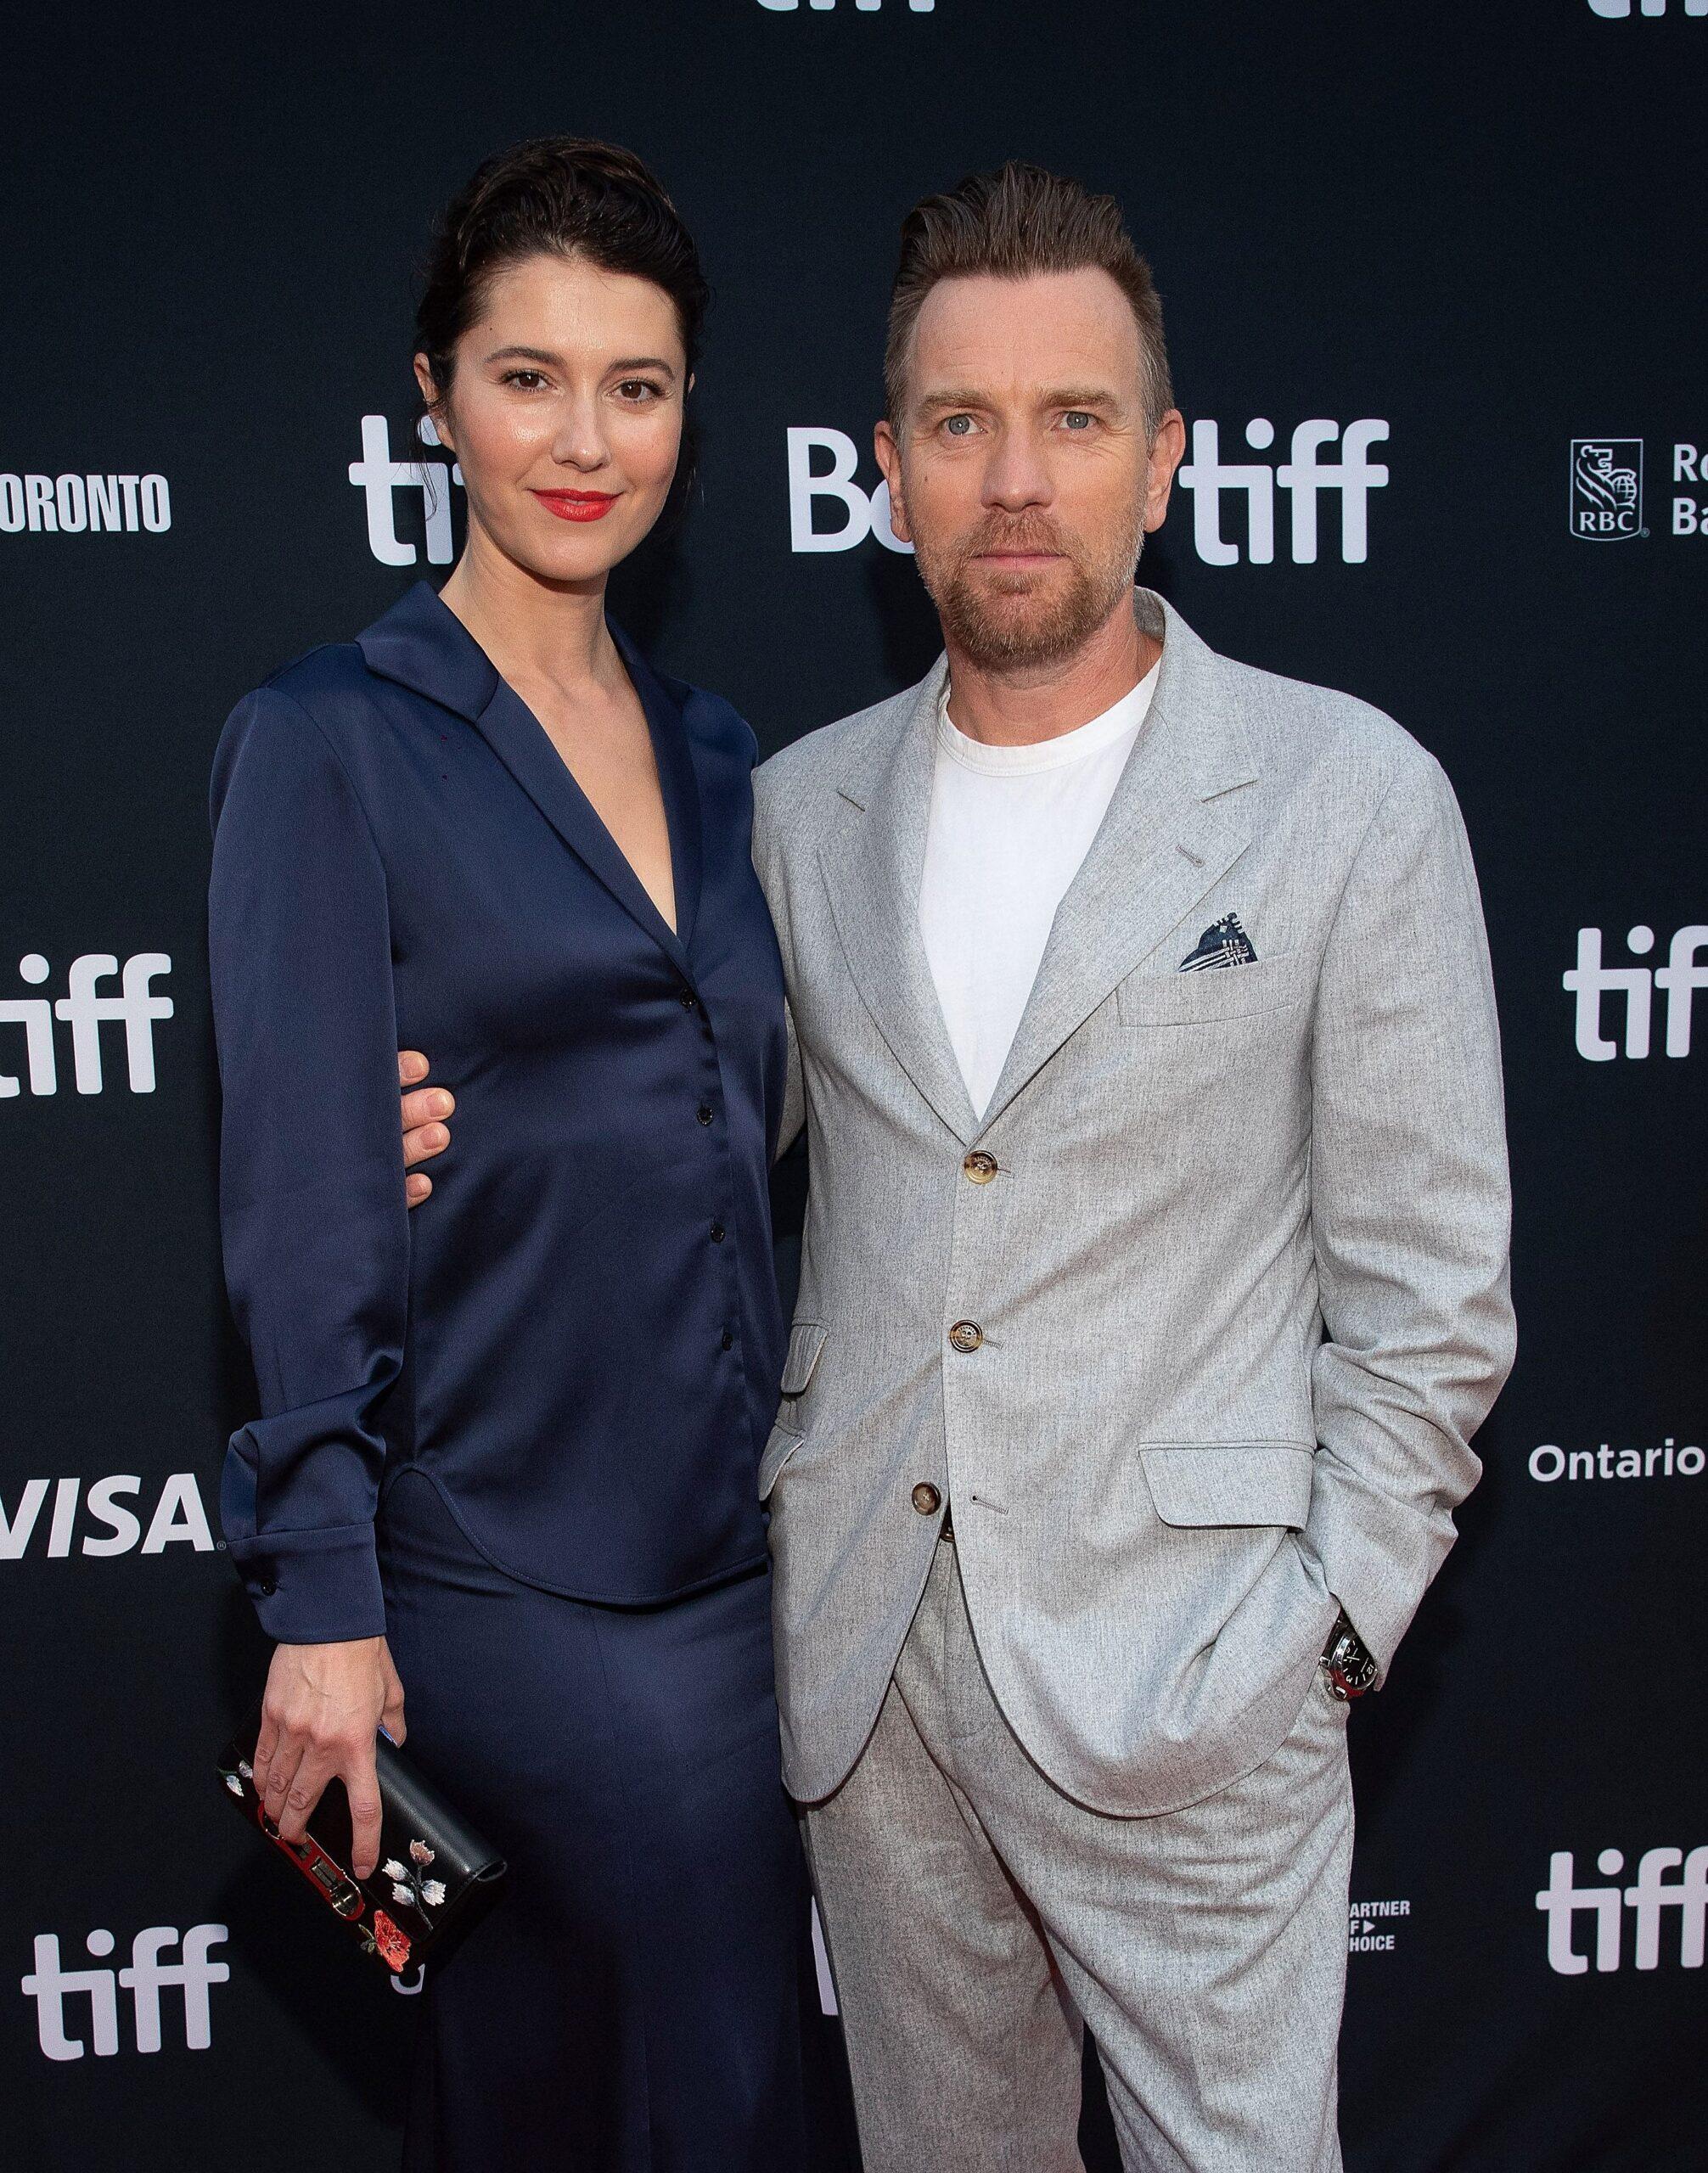 Mary Elizabeth Winstead and Ewan McGregor at the 2022 Toronto International Film Festival - "Raymond